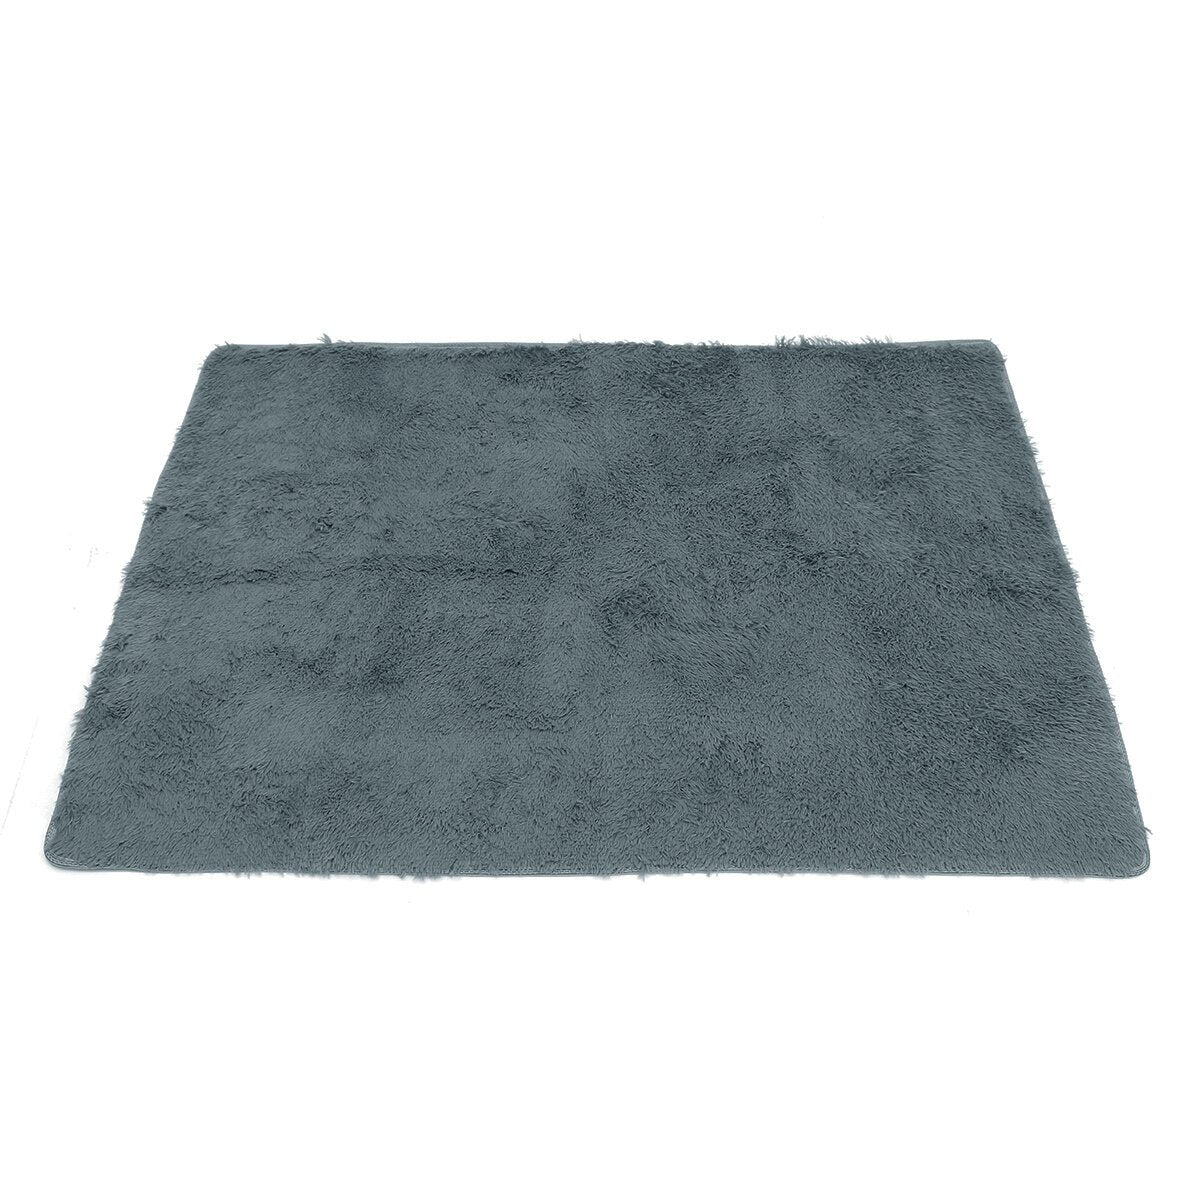 Fluffy Rugs Anti-Skid Shaggy Area Rug Home Room Decor Carpet Floor Mat Baby Playmat